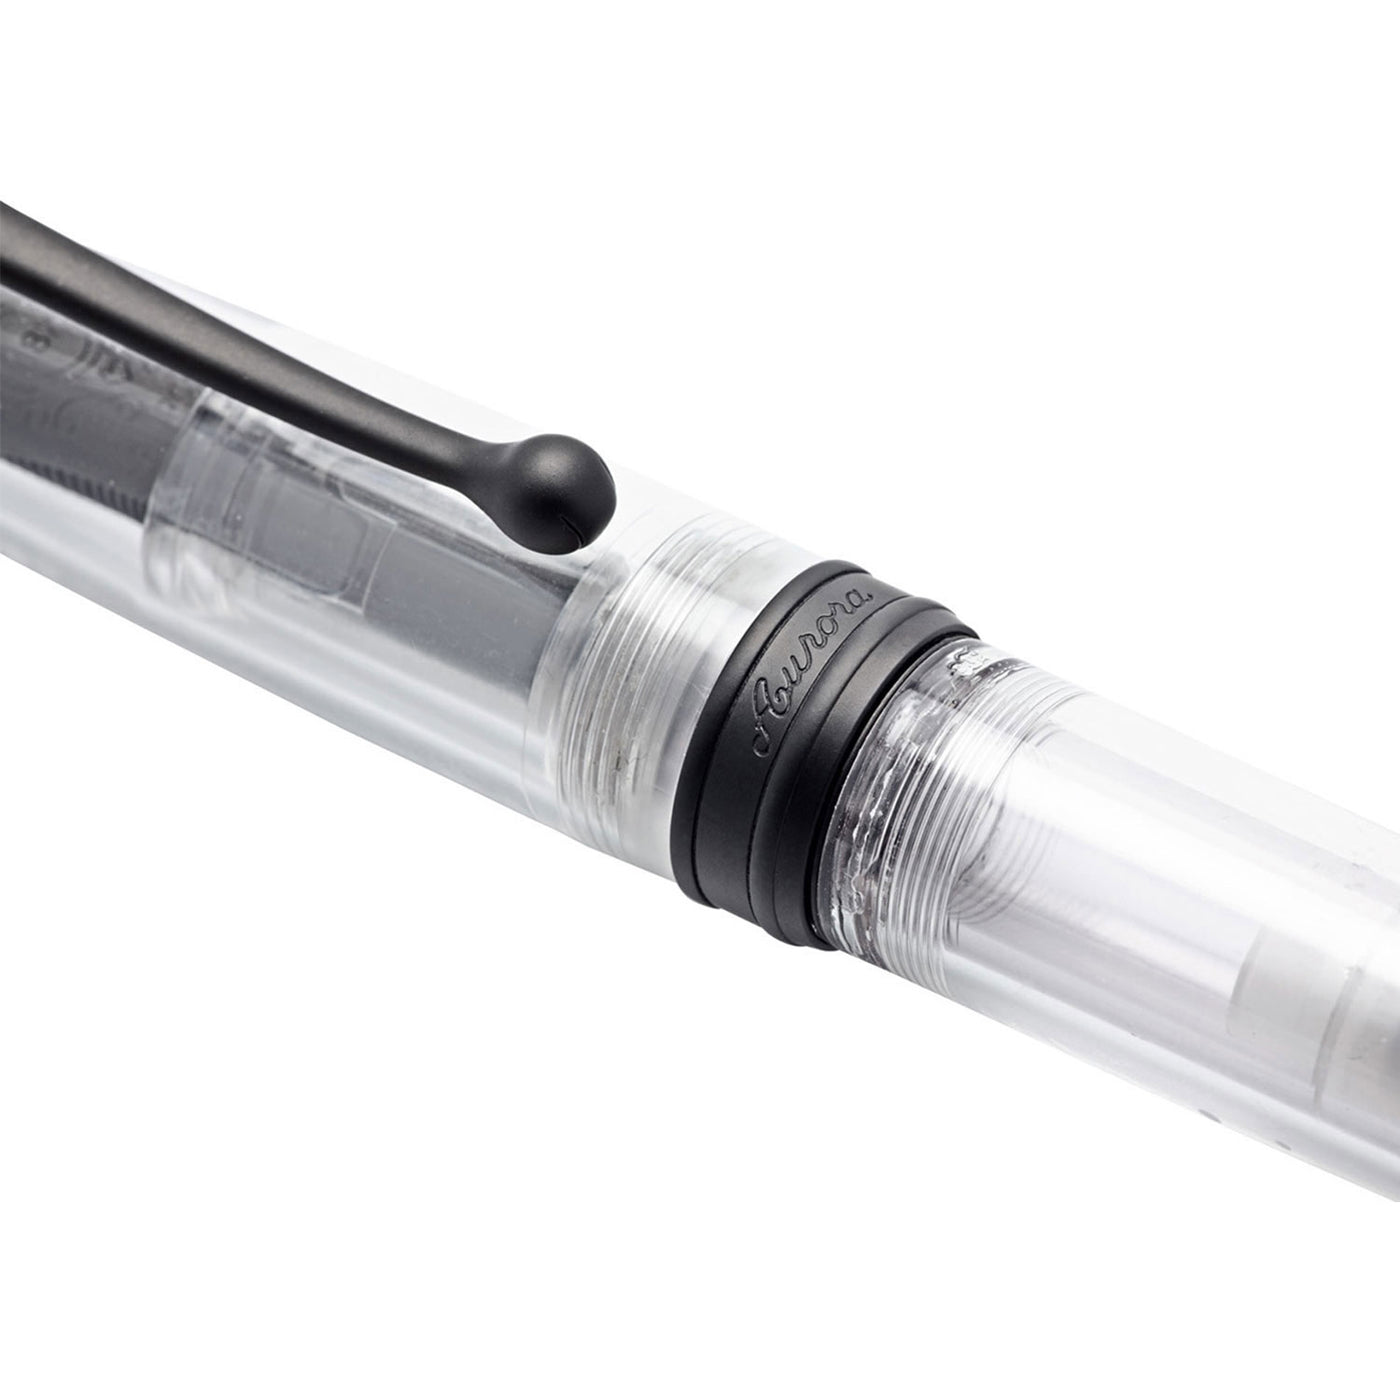 Aurora 88 Fountain Pen - Demonstrator Nera (Limited Edition) 5